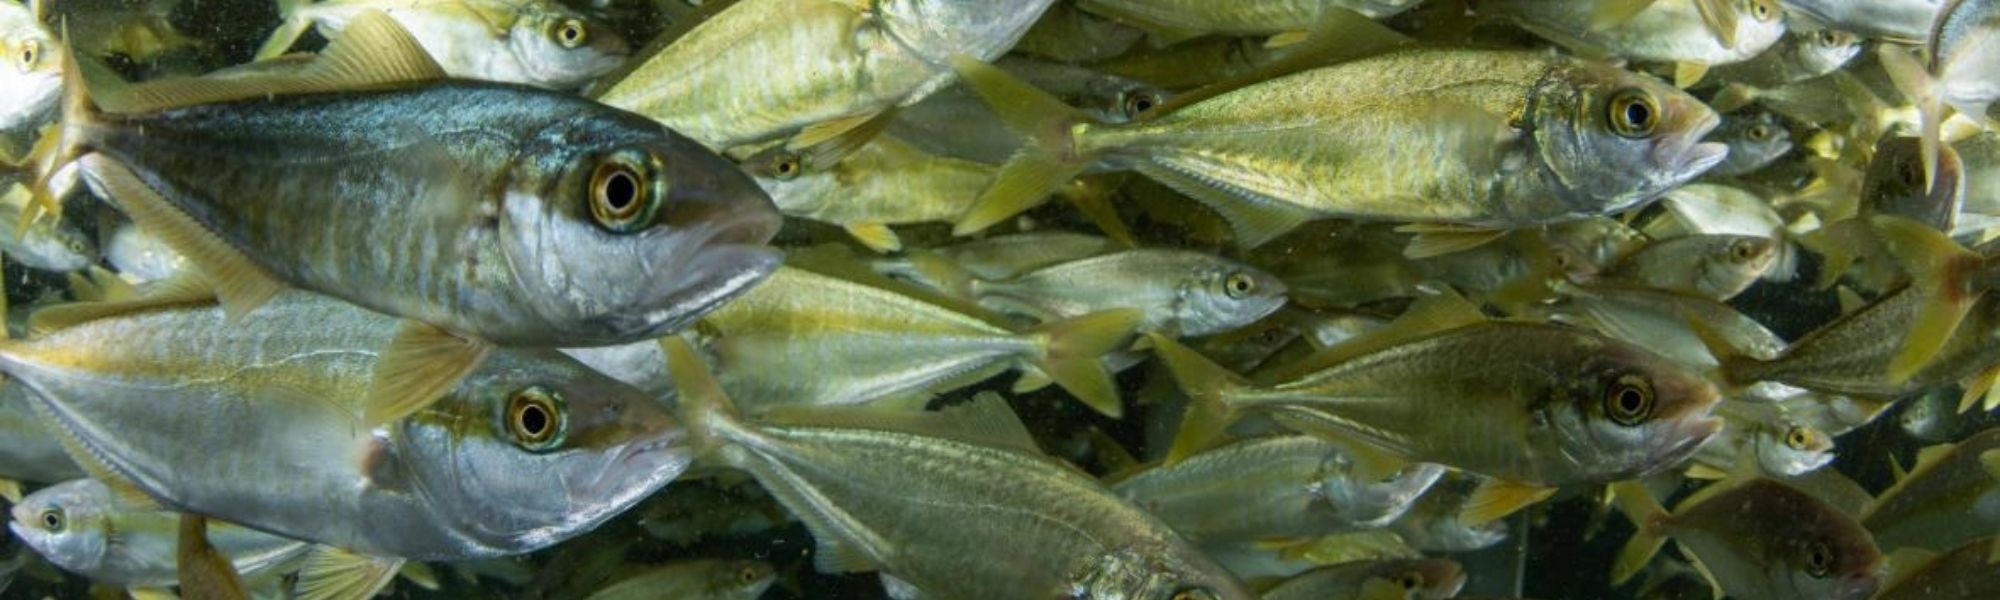 Aquaculture-NIWA-header-fish.jpg